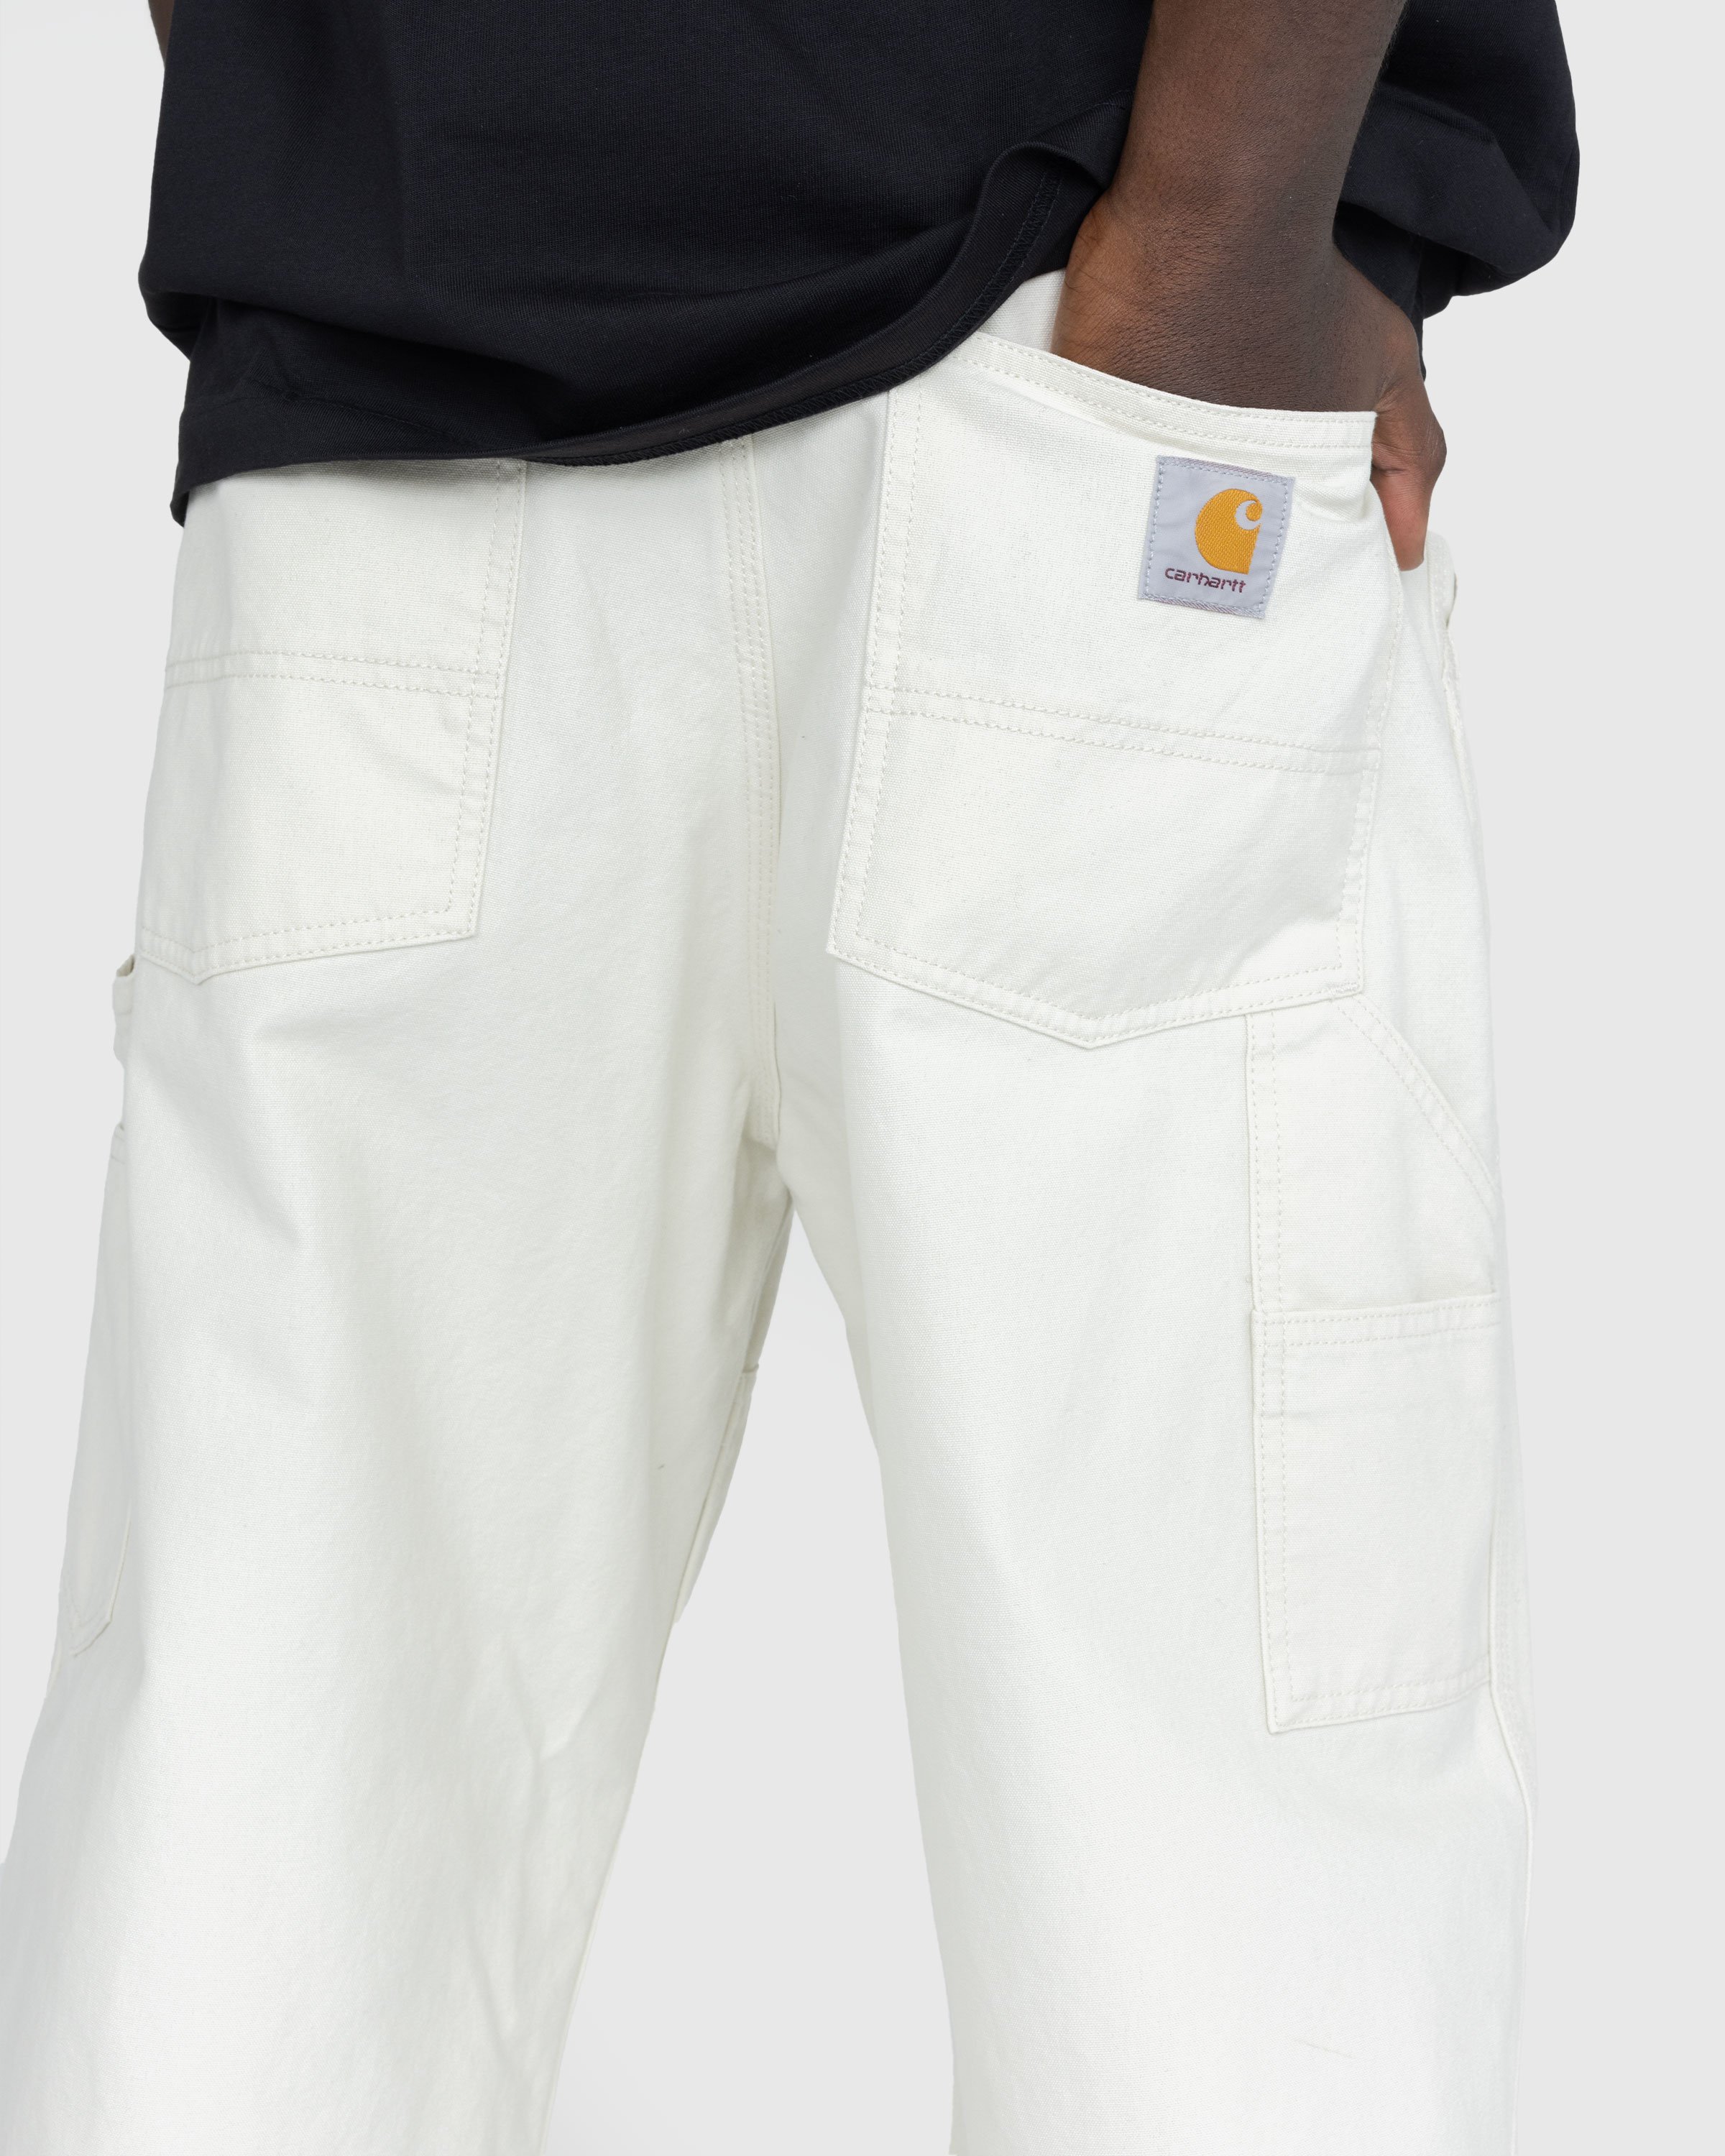 Carhartt WIP - Wide Panel Pant Salt/Rinsed - Clothing - White - Image 4